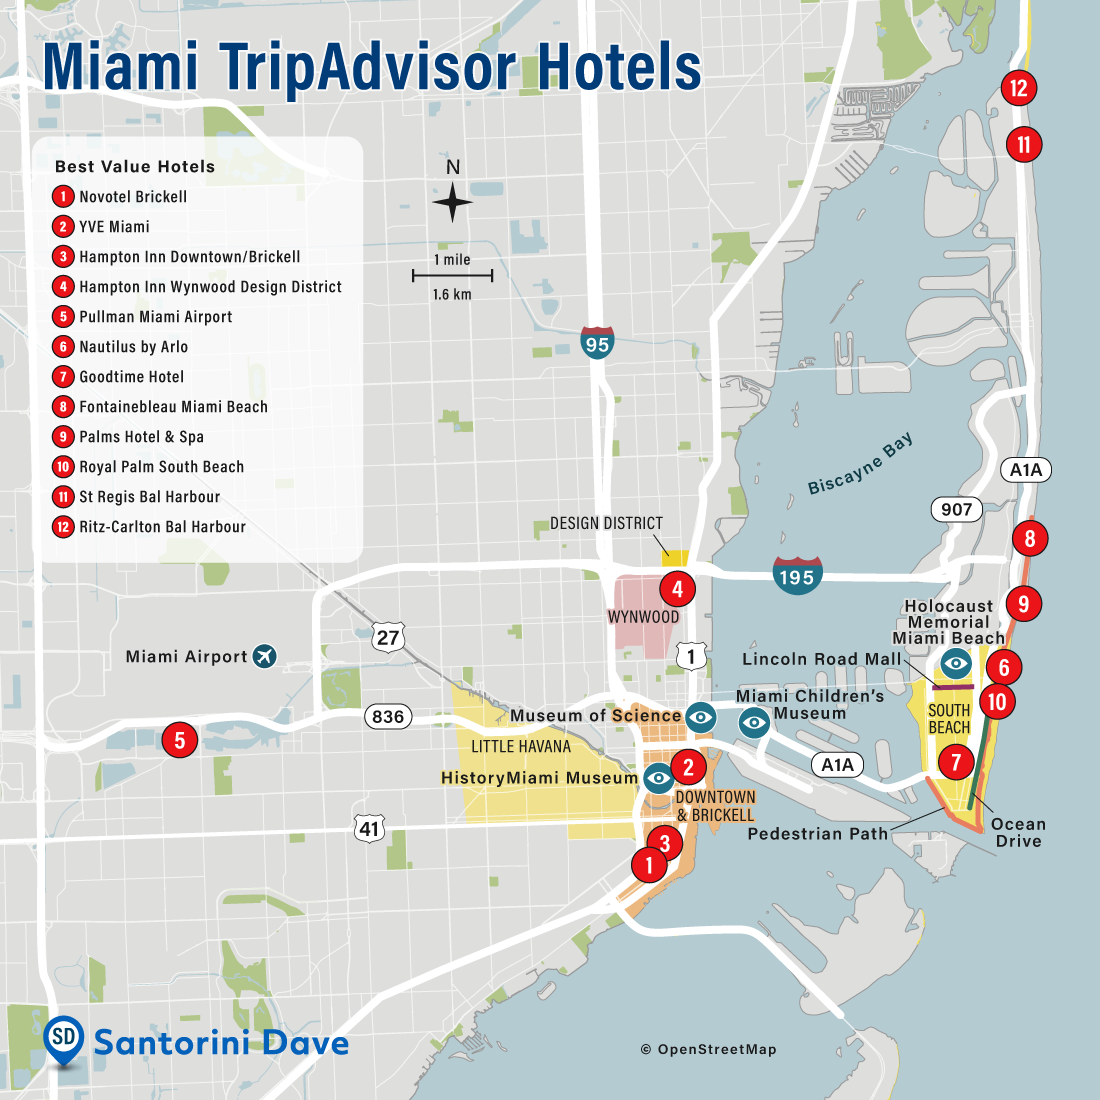 Miami TripAdvisor Hotels